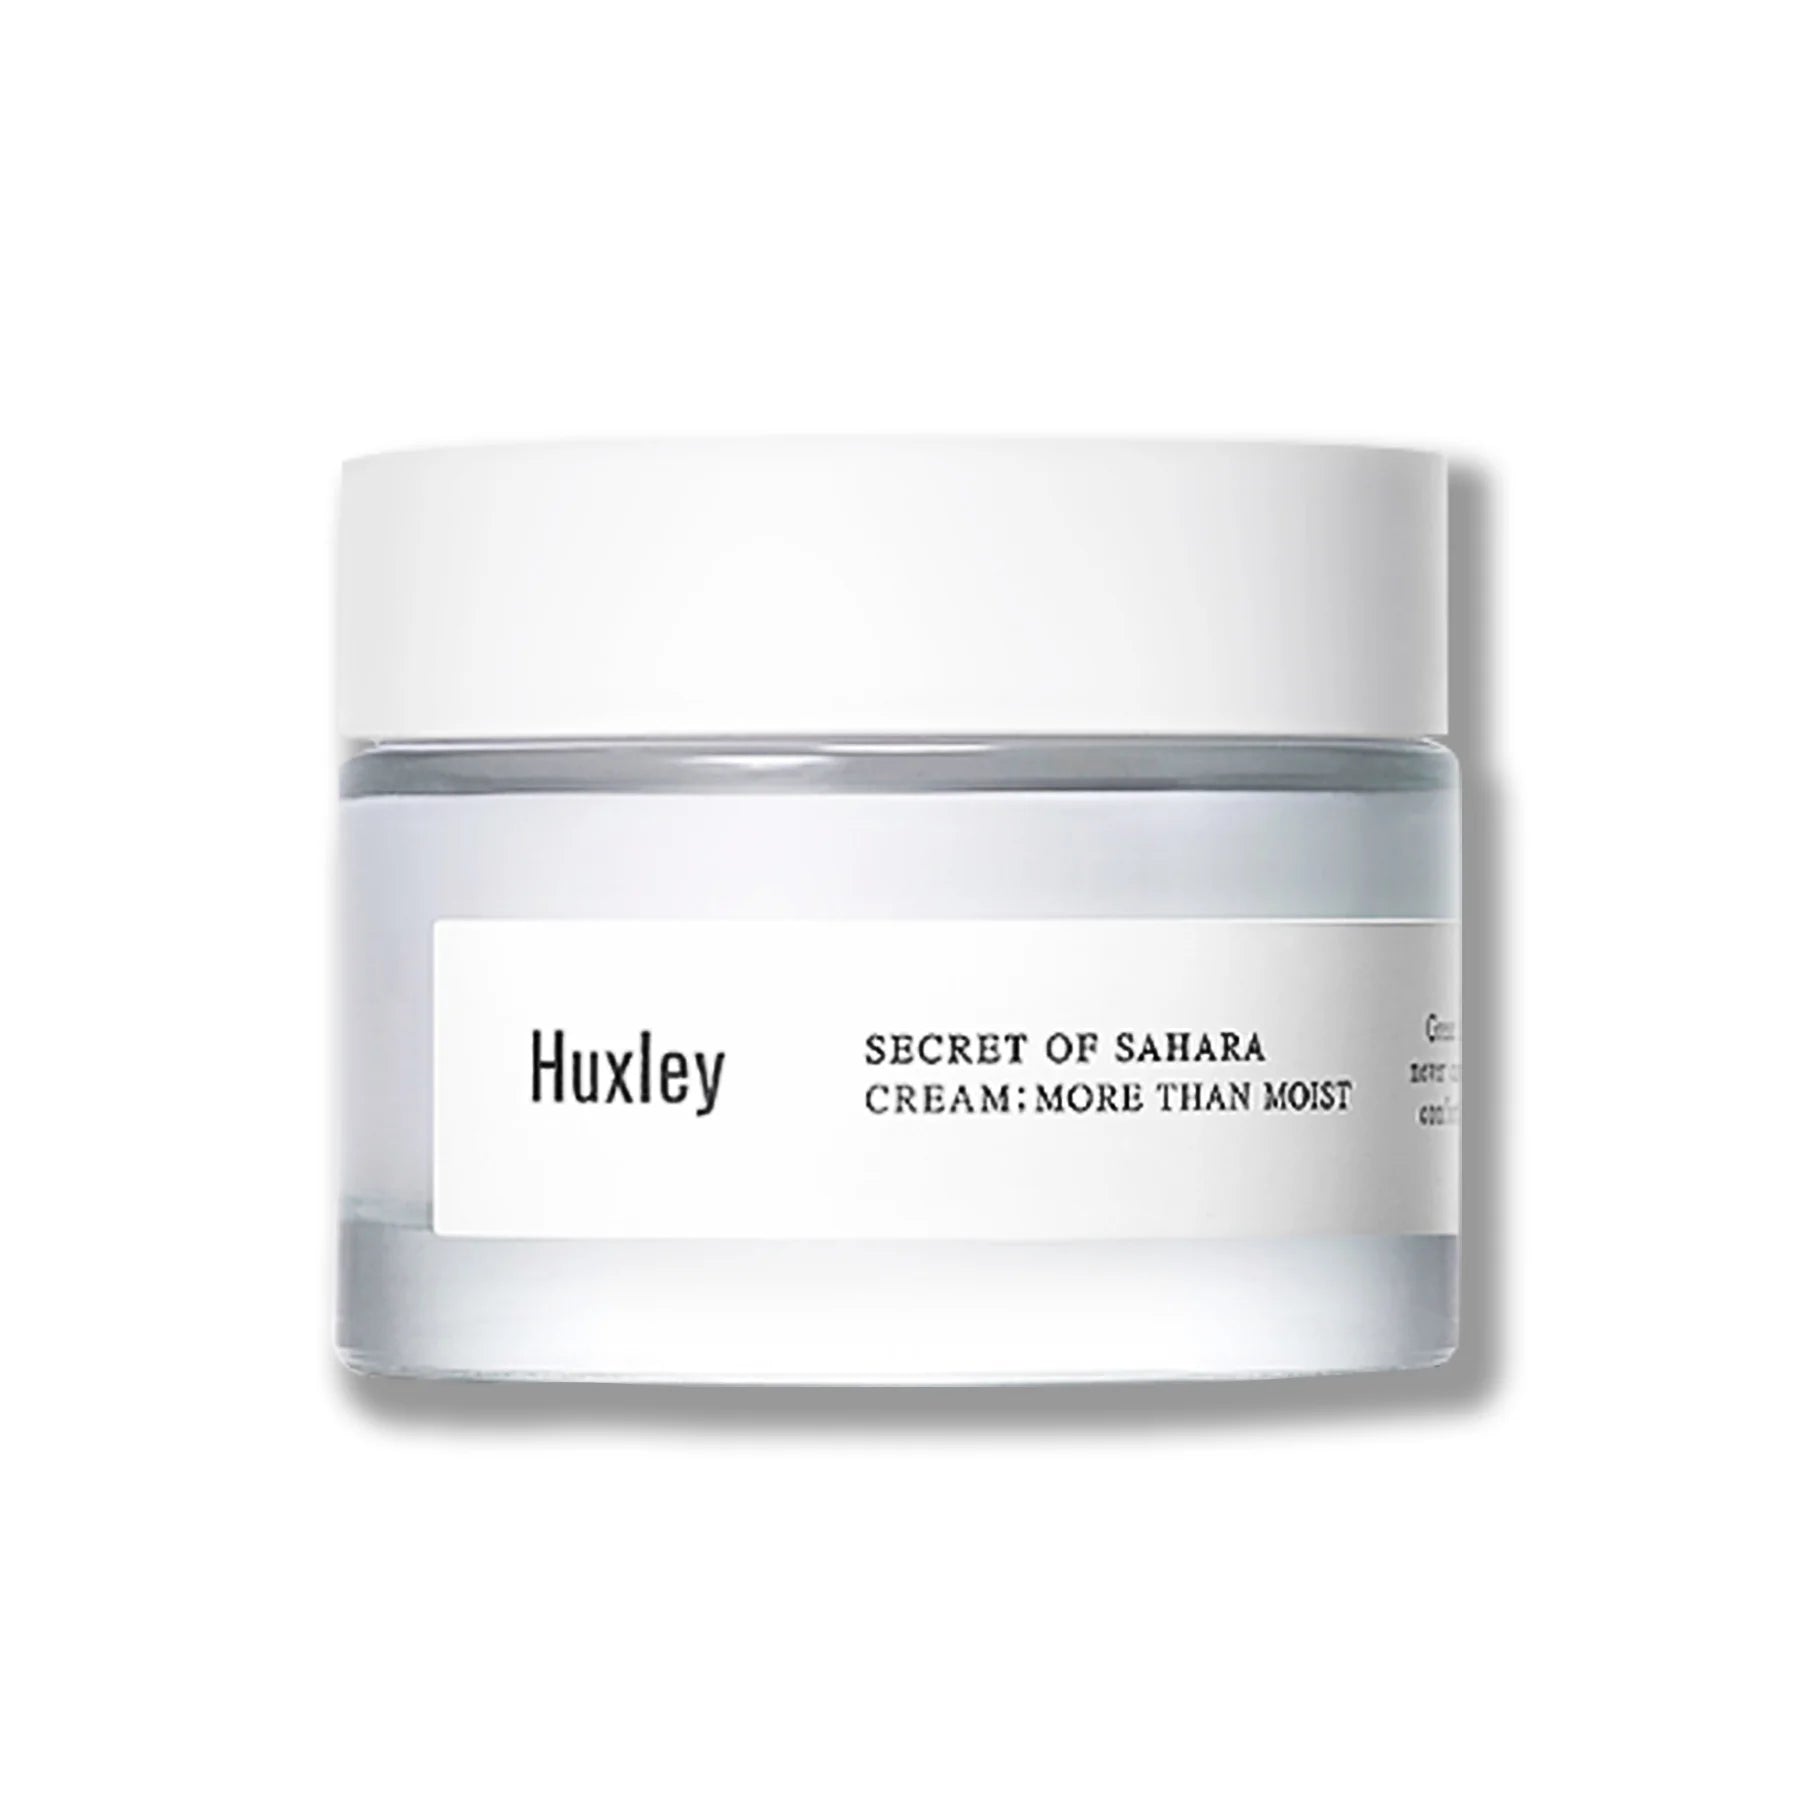 Huxley Secret of Sahara Cream More Than Moist moisturizer dry skin Korean cosmetics K Beauty World